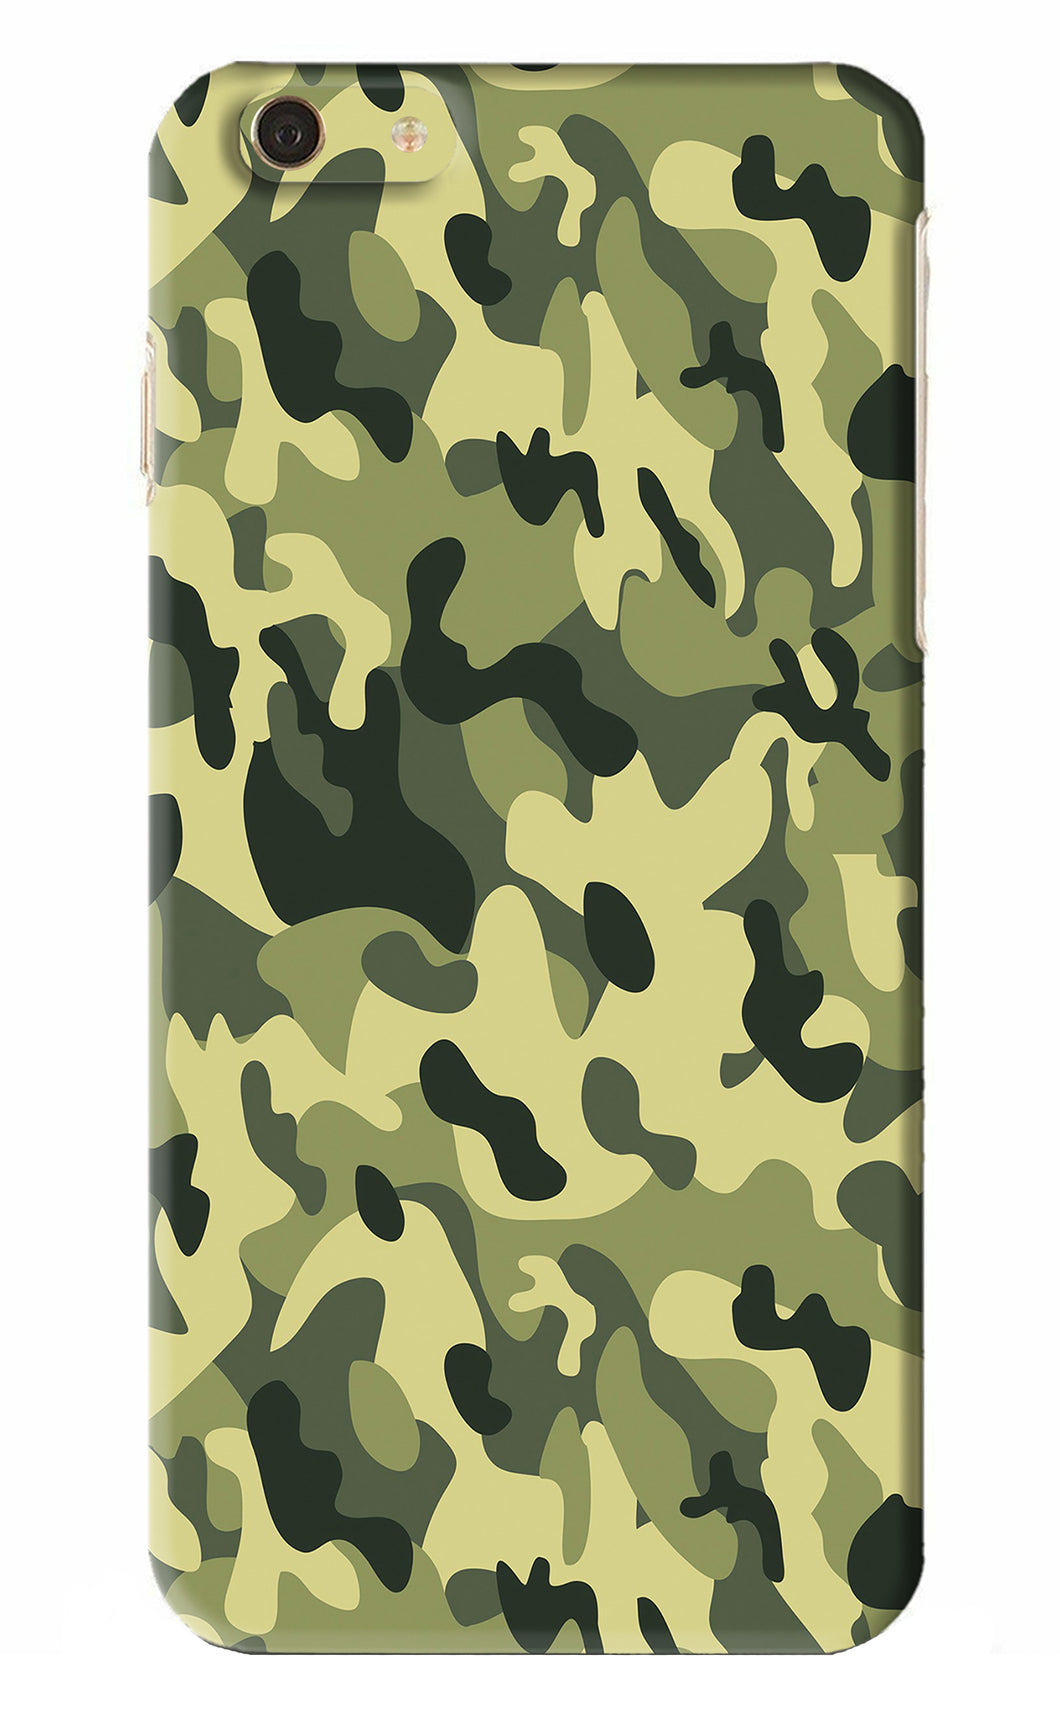 Camouflage iPhone 6 Plus Back Skin Wrap